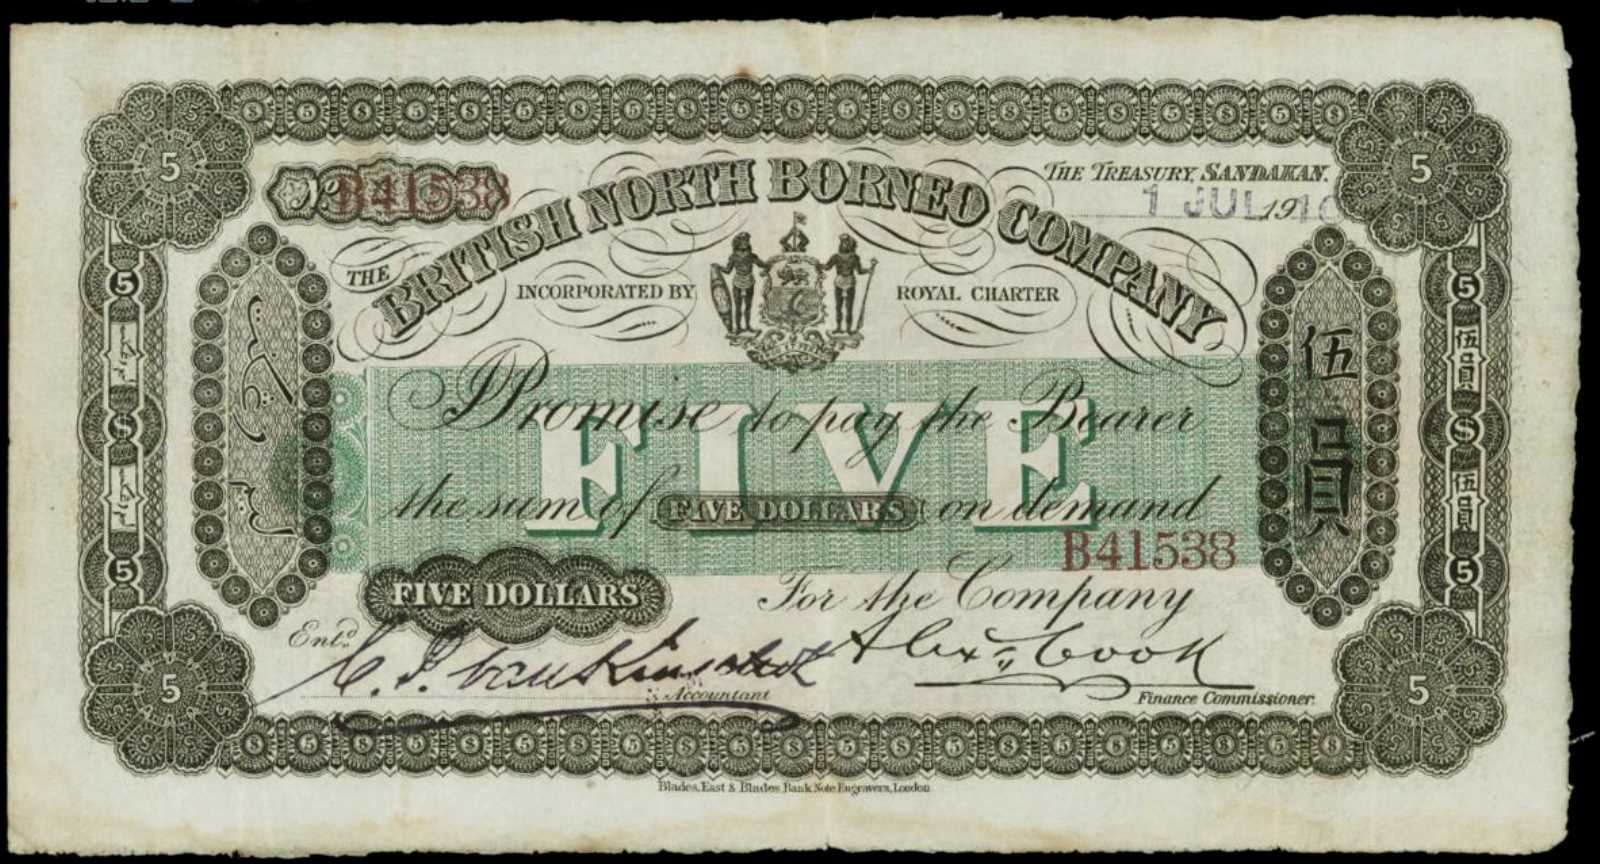 4 5 dollars. Банкноты 1 доллар 1910 ньюфаундленд. Доллар Северного Борнео. Доллар 1910 года фото. Banknotes from Mexico 1910.